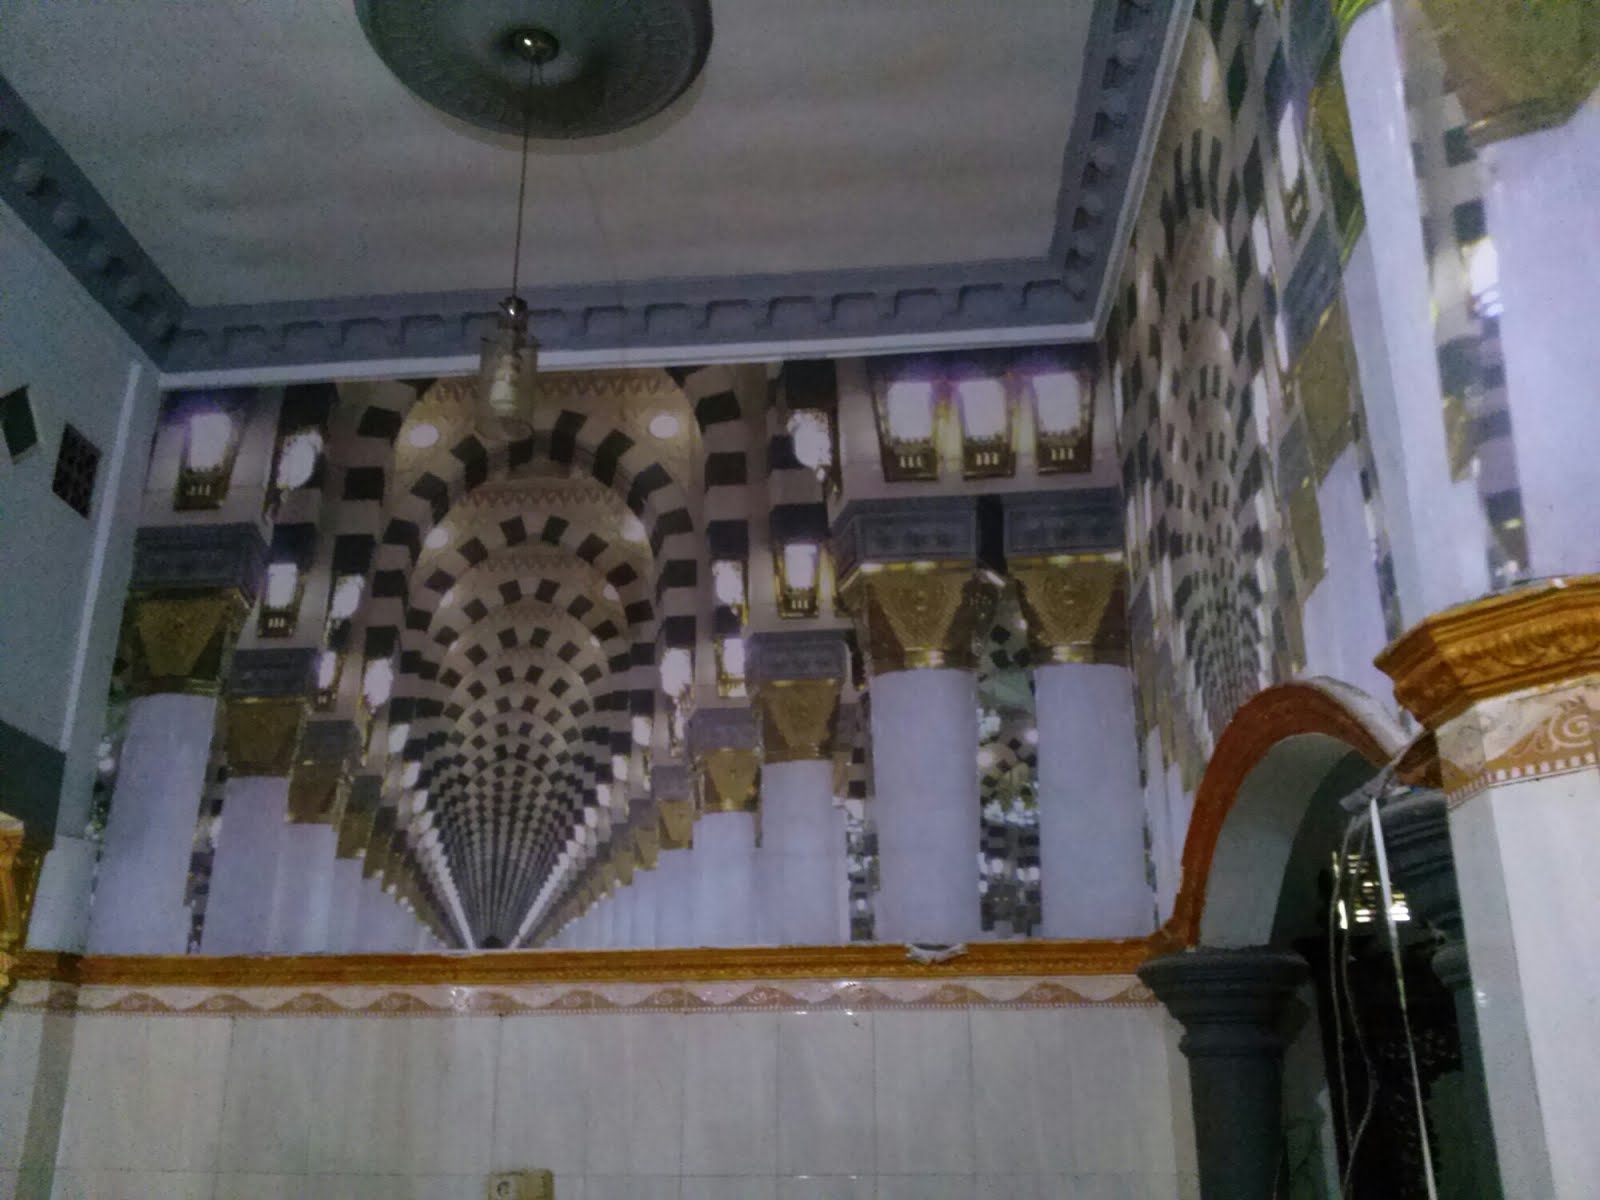 18 Motif  Wallpaper Dinding  Masjid  Rona Wallpaper